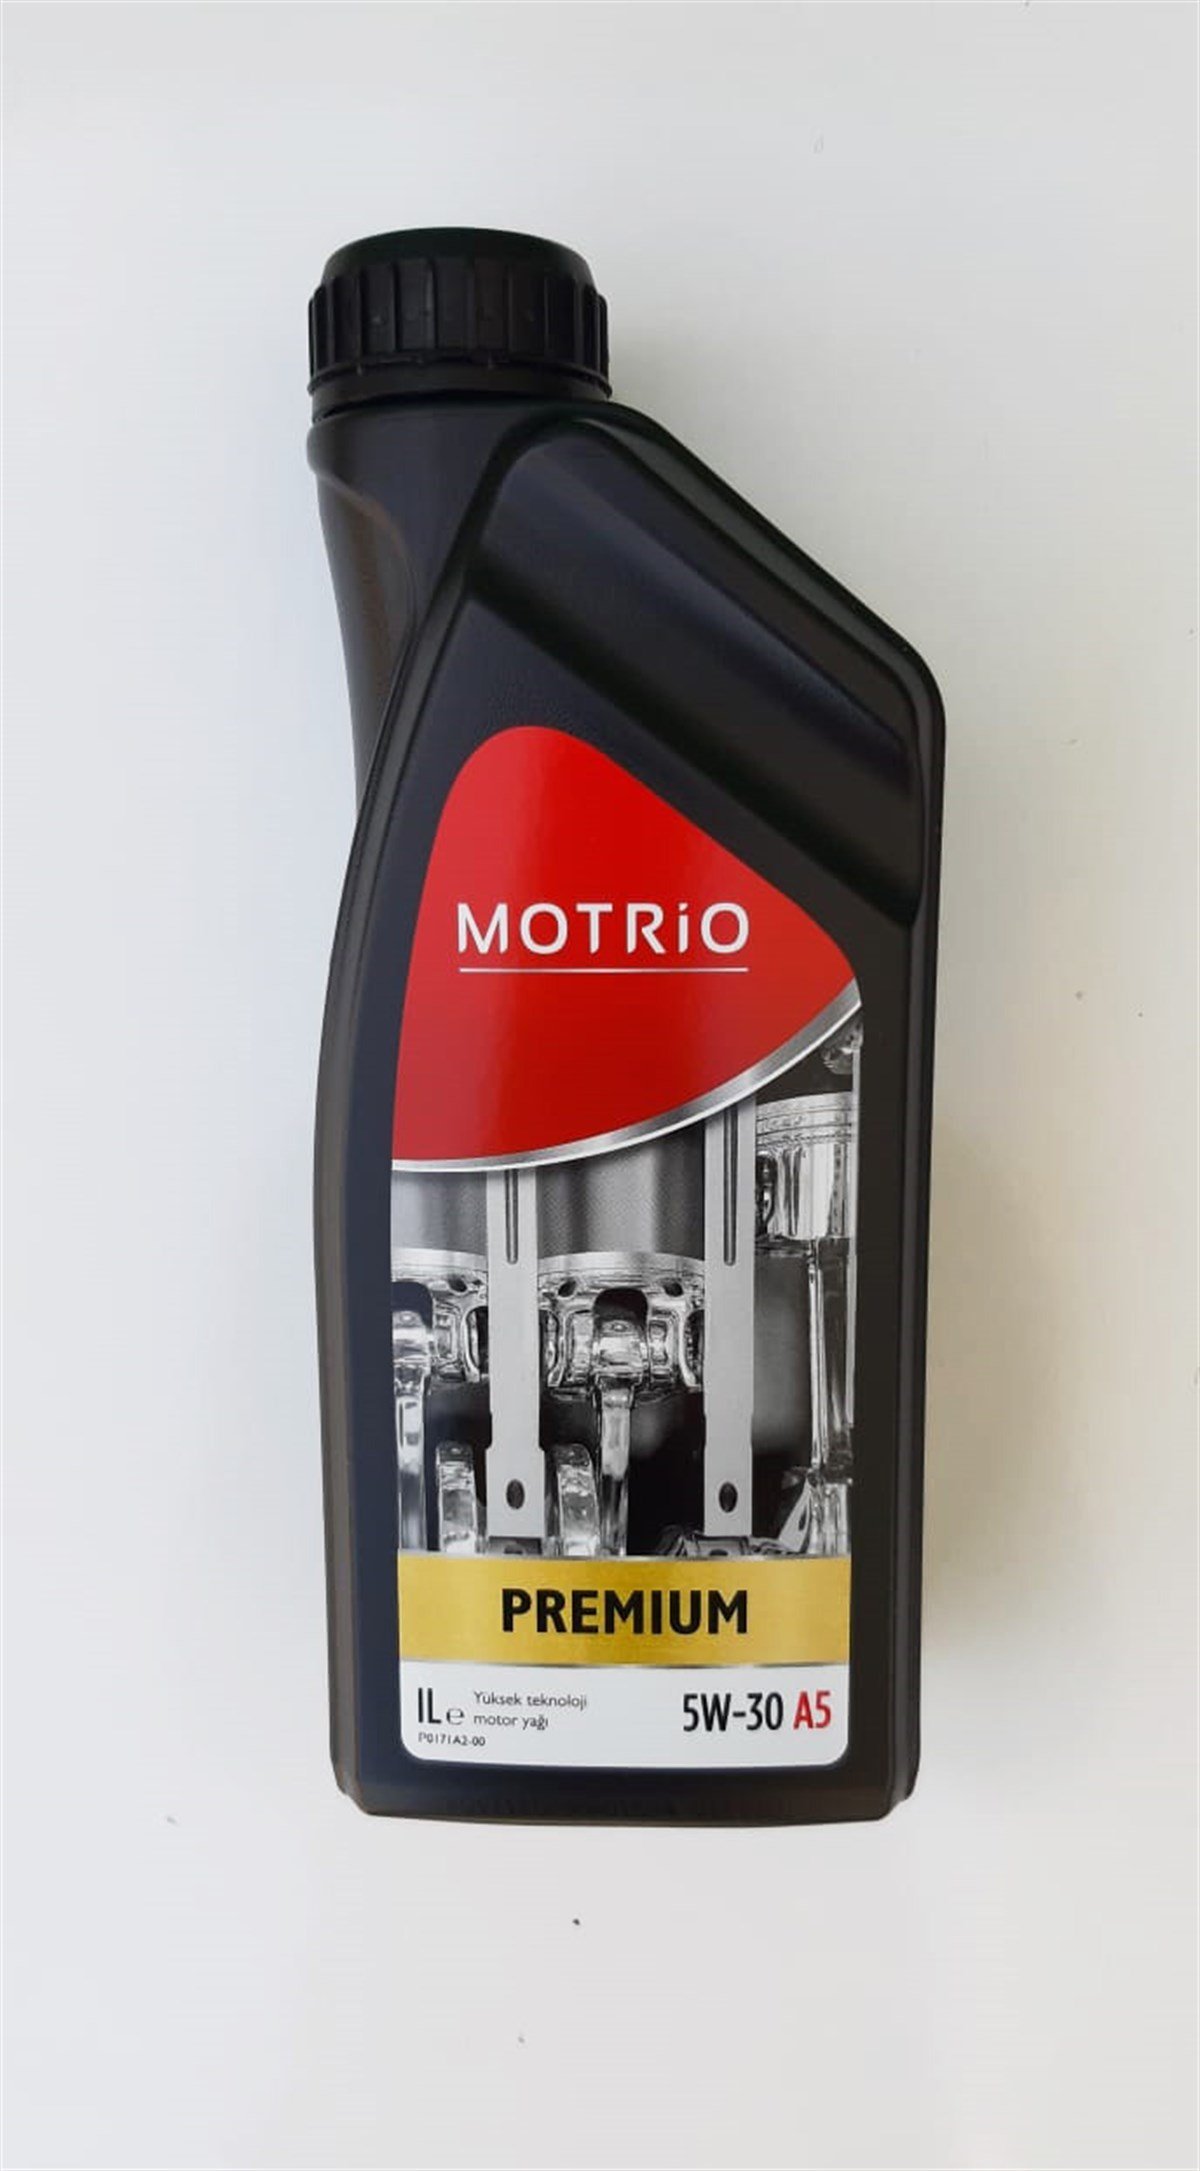 Motrio Premium 5W-30 A5 1 Litre Yüksek Teknoloji Motor Yağı - Akbak Market